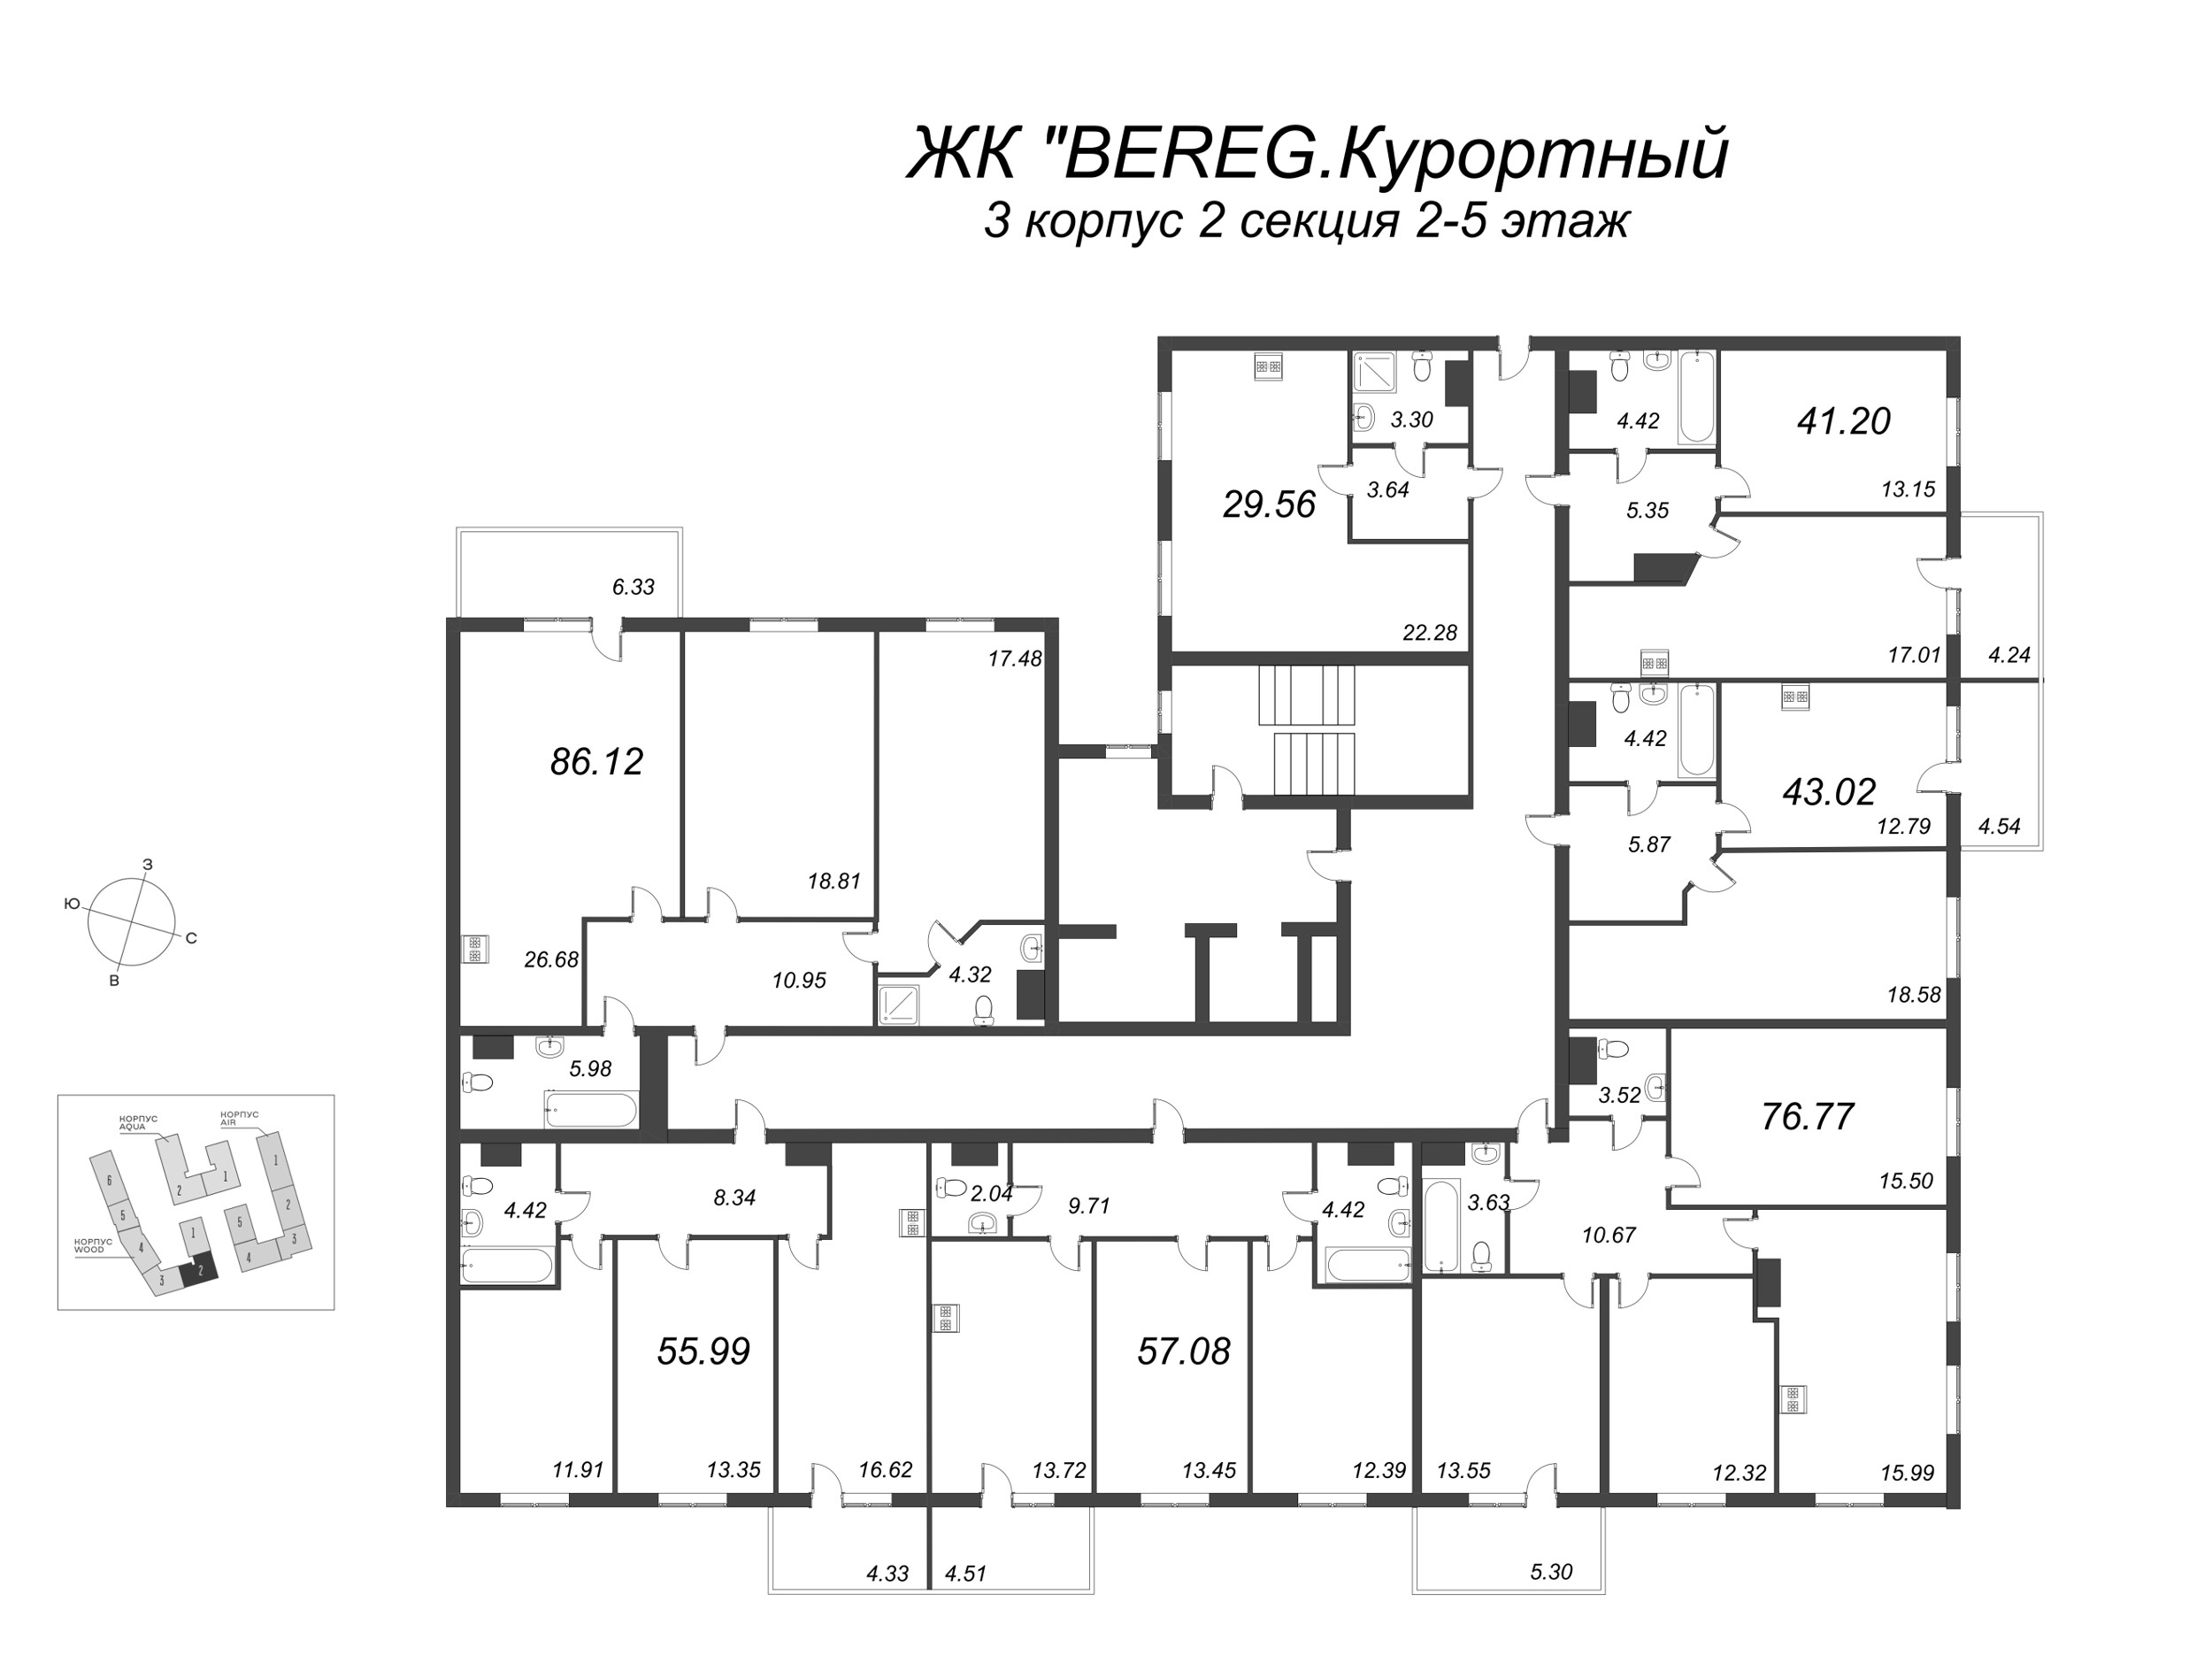 3-комнатная (Евро) квартира, 55.99 м² - планировка этажа